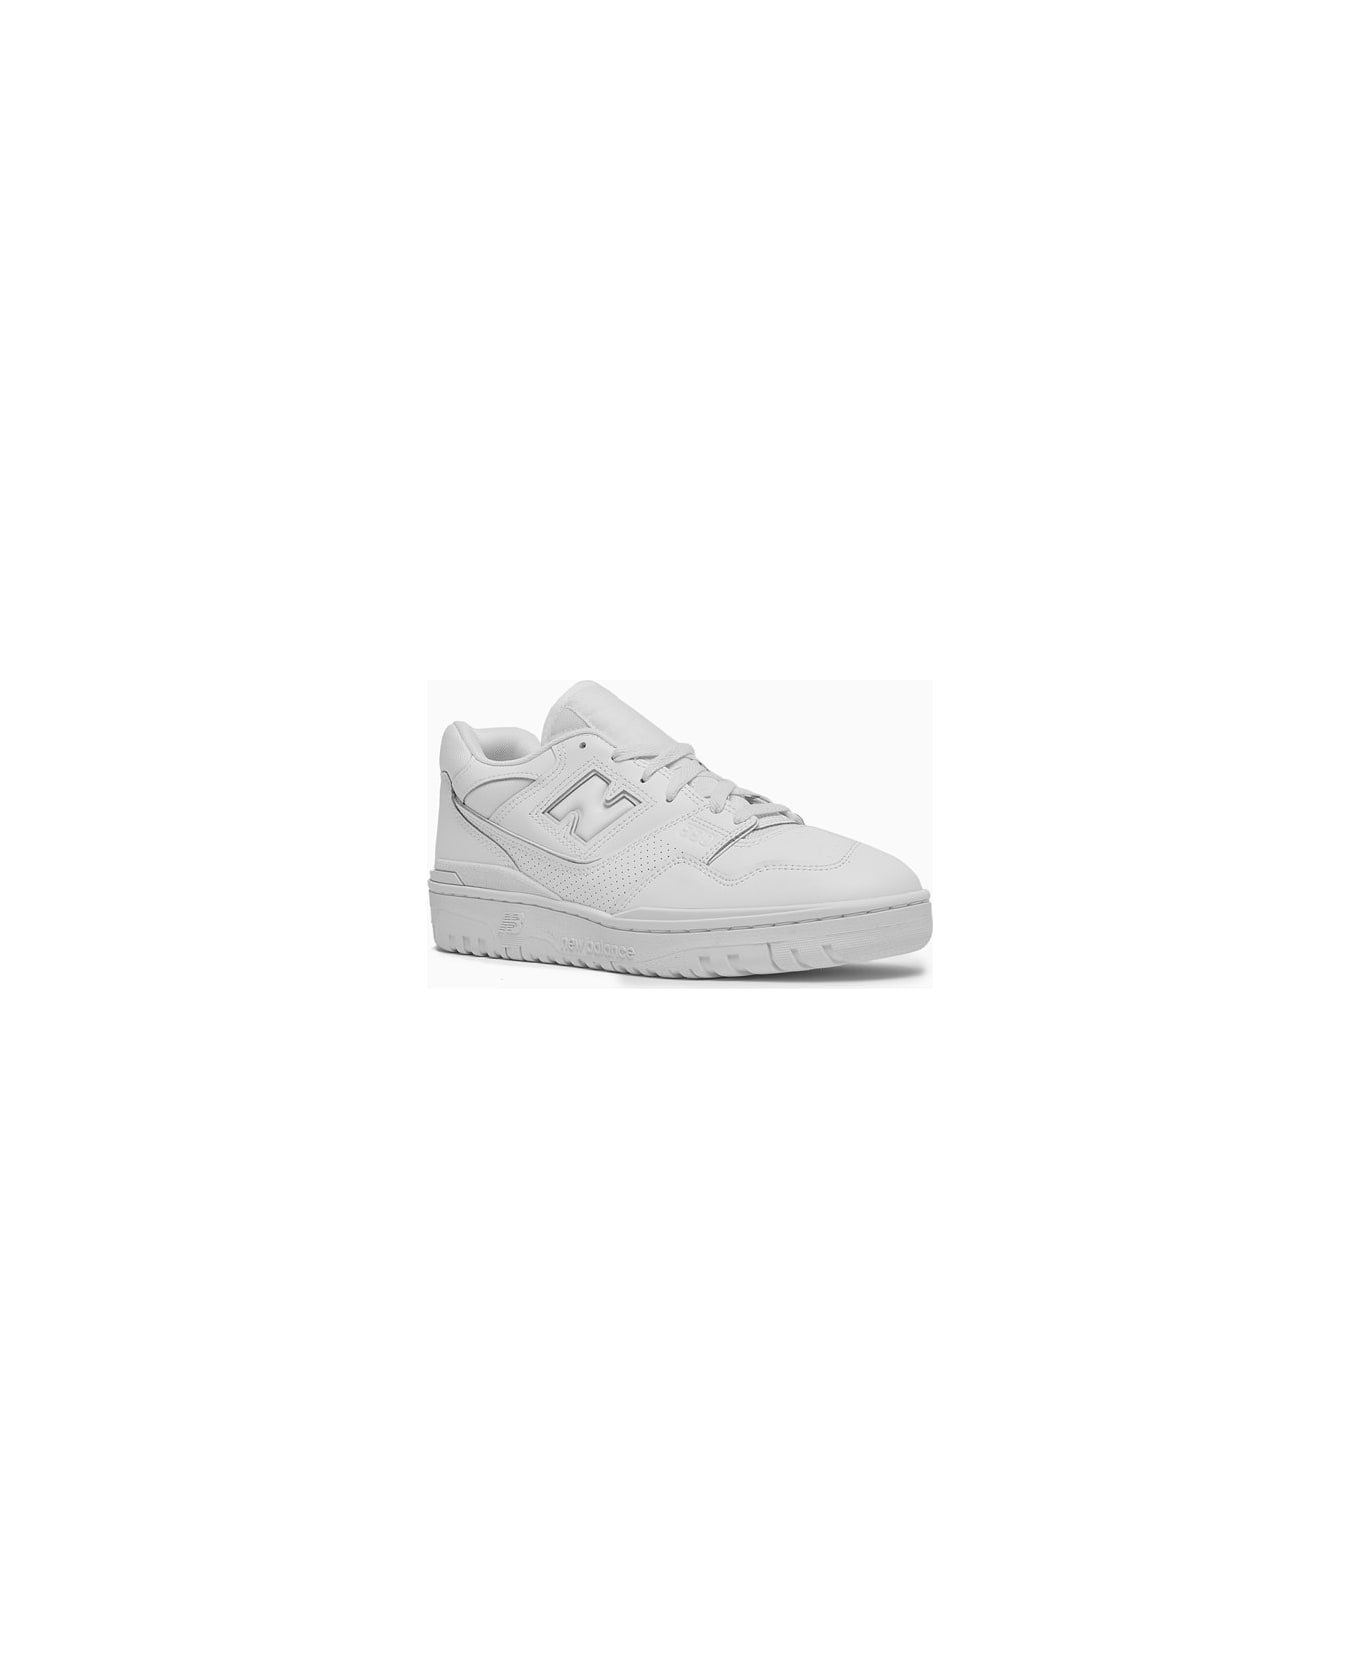 New Balance Sneakers Gsb550ww Gs - WHITE シューズ